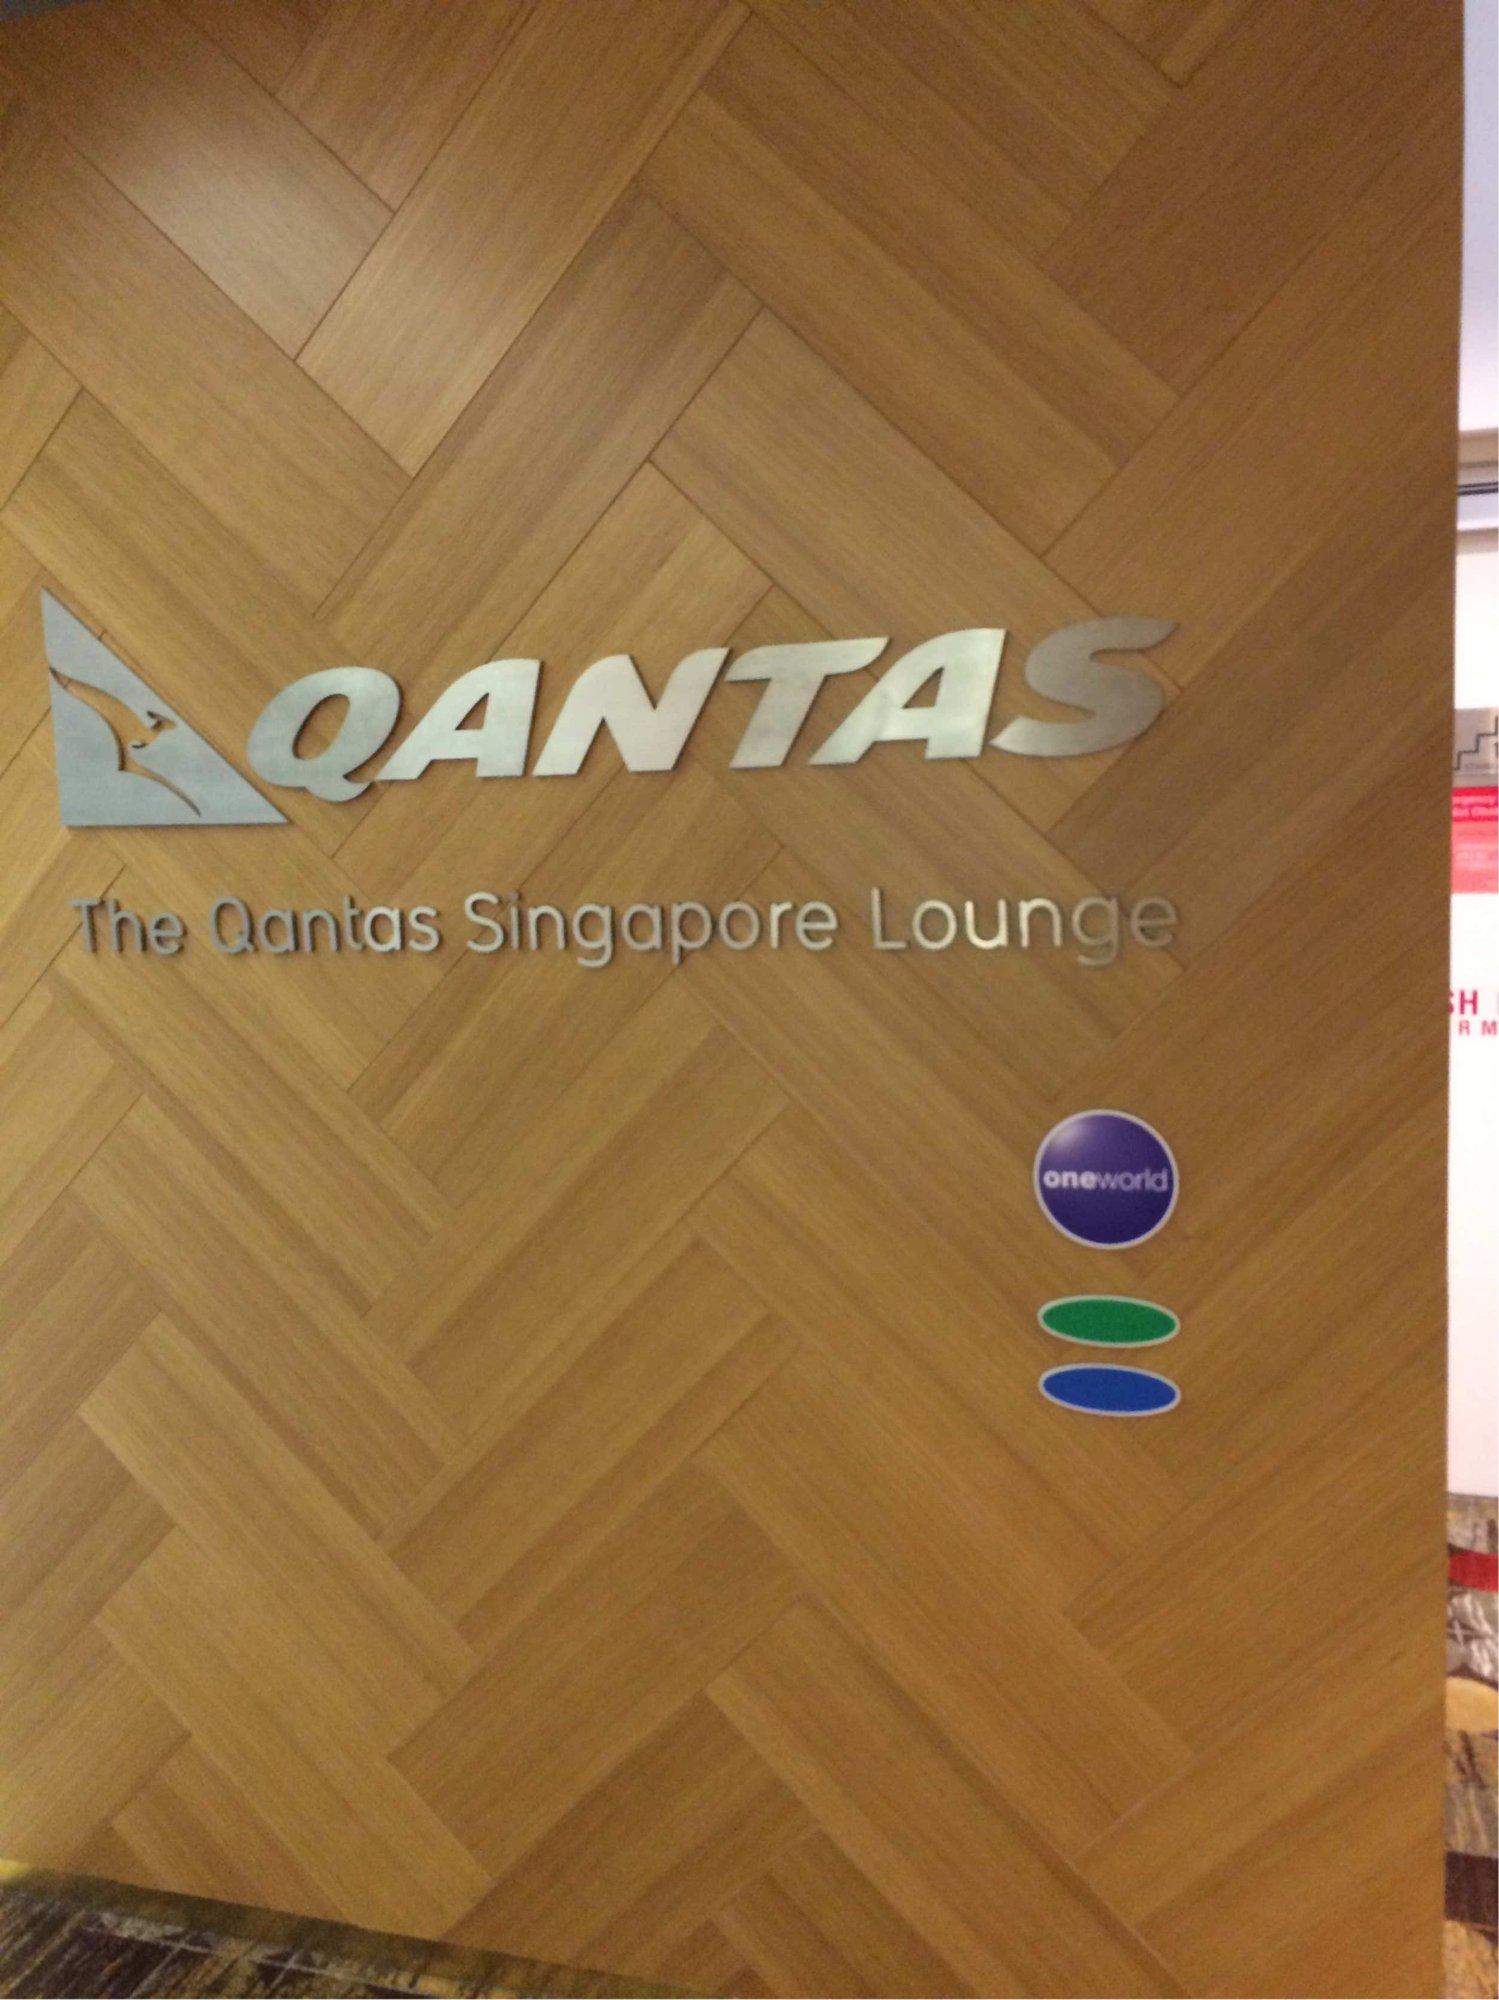 The Qantas Singapore Lounge image 47 of 49